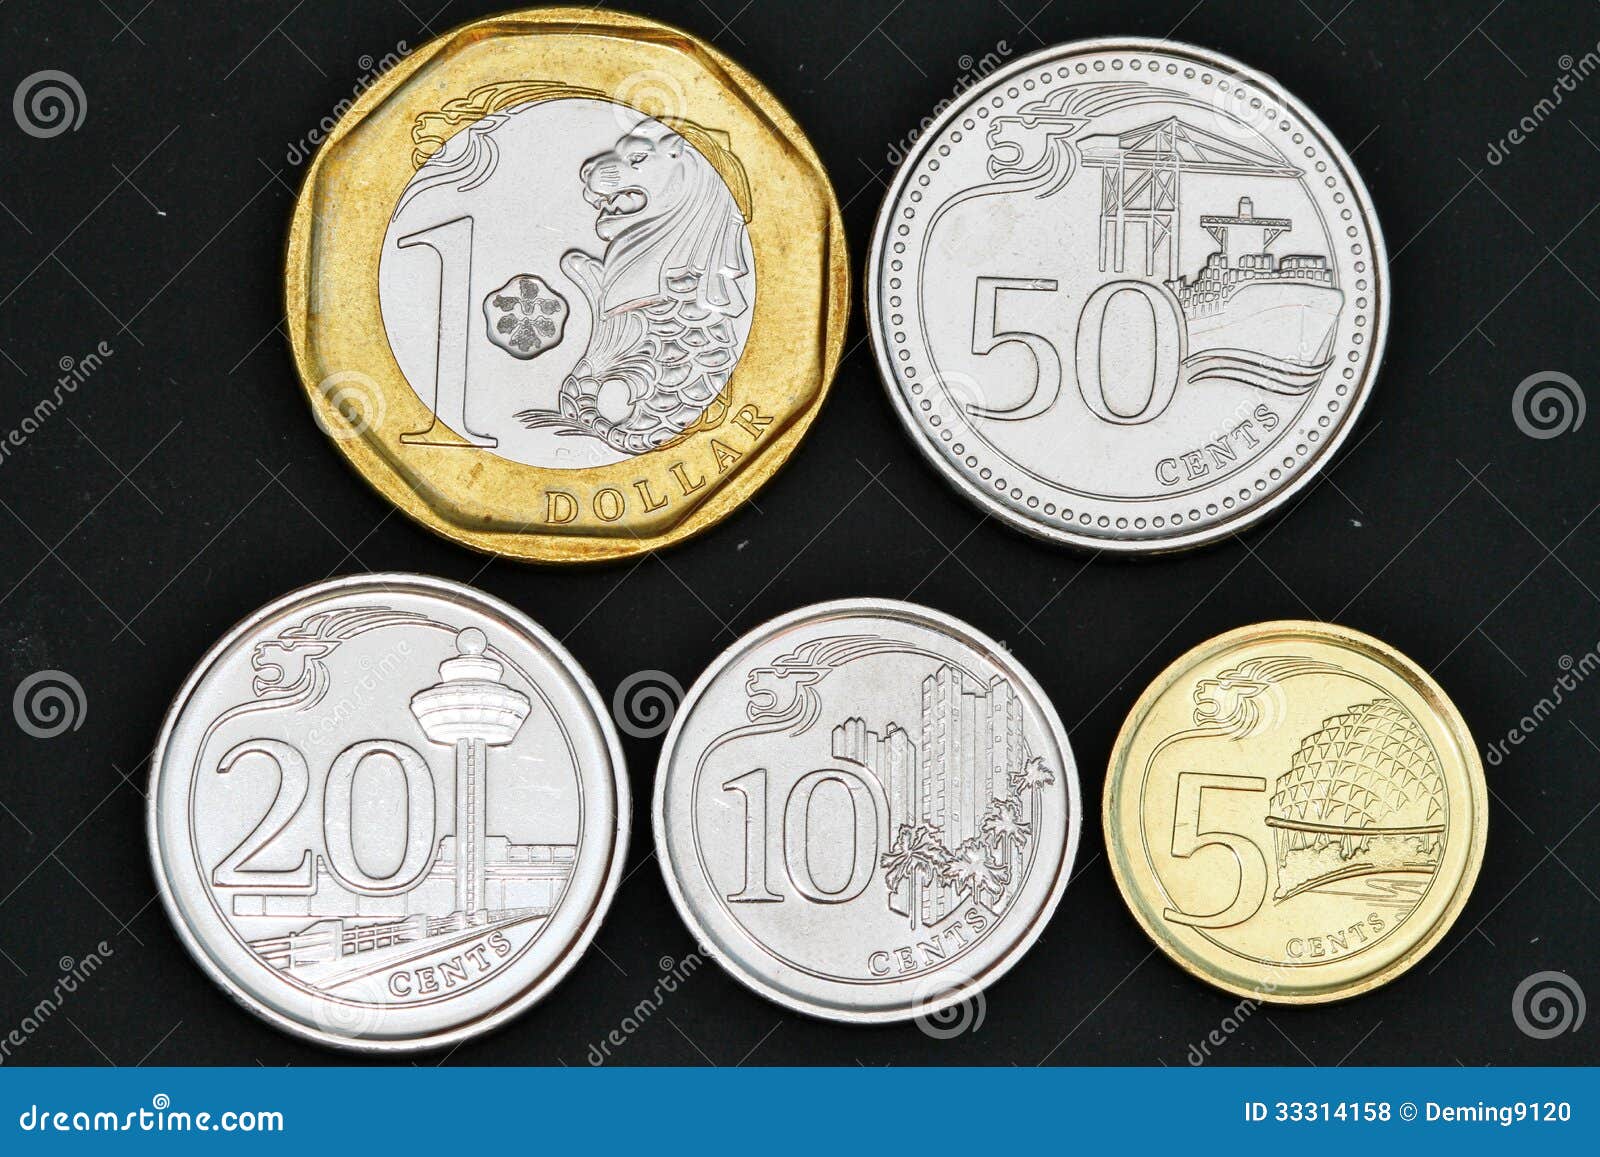 2013 Singapore Coins Royalty Free Stock Photos - Image ...